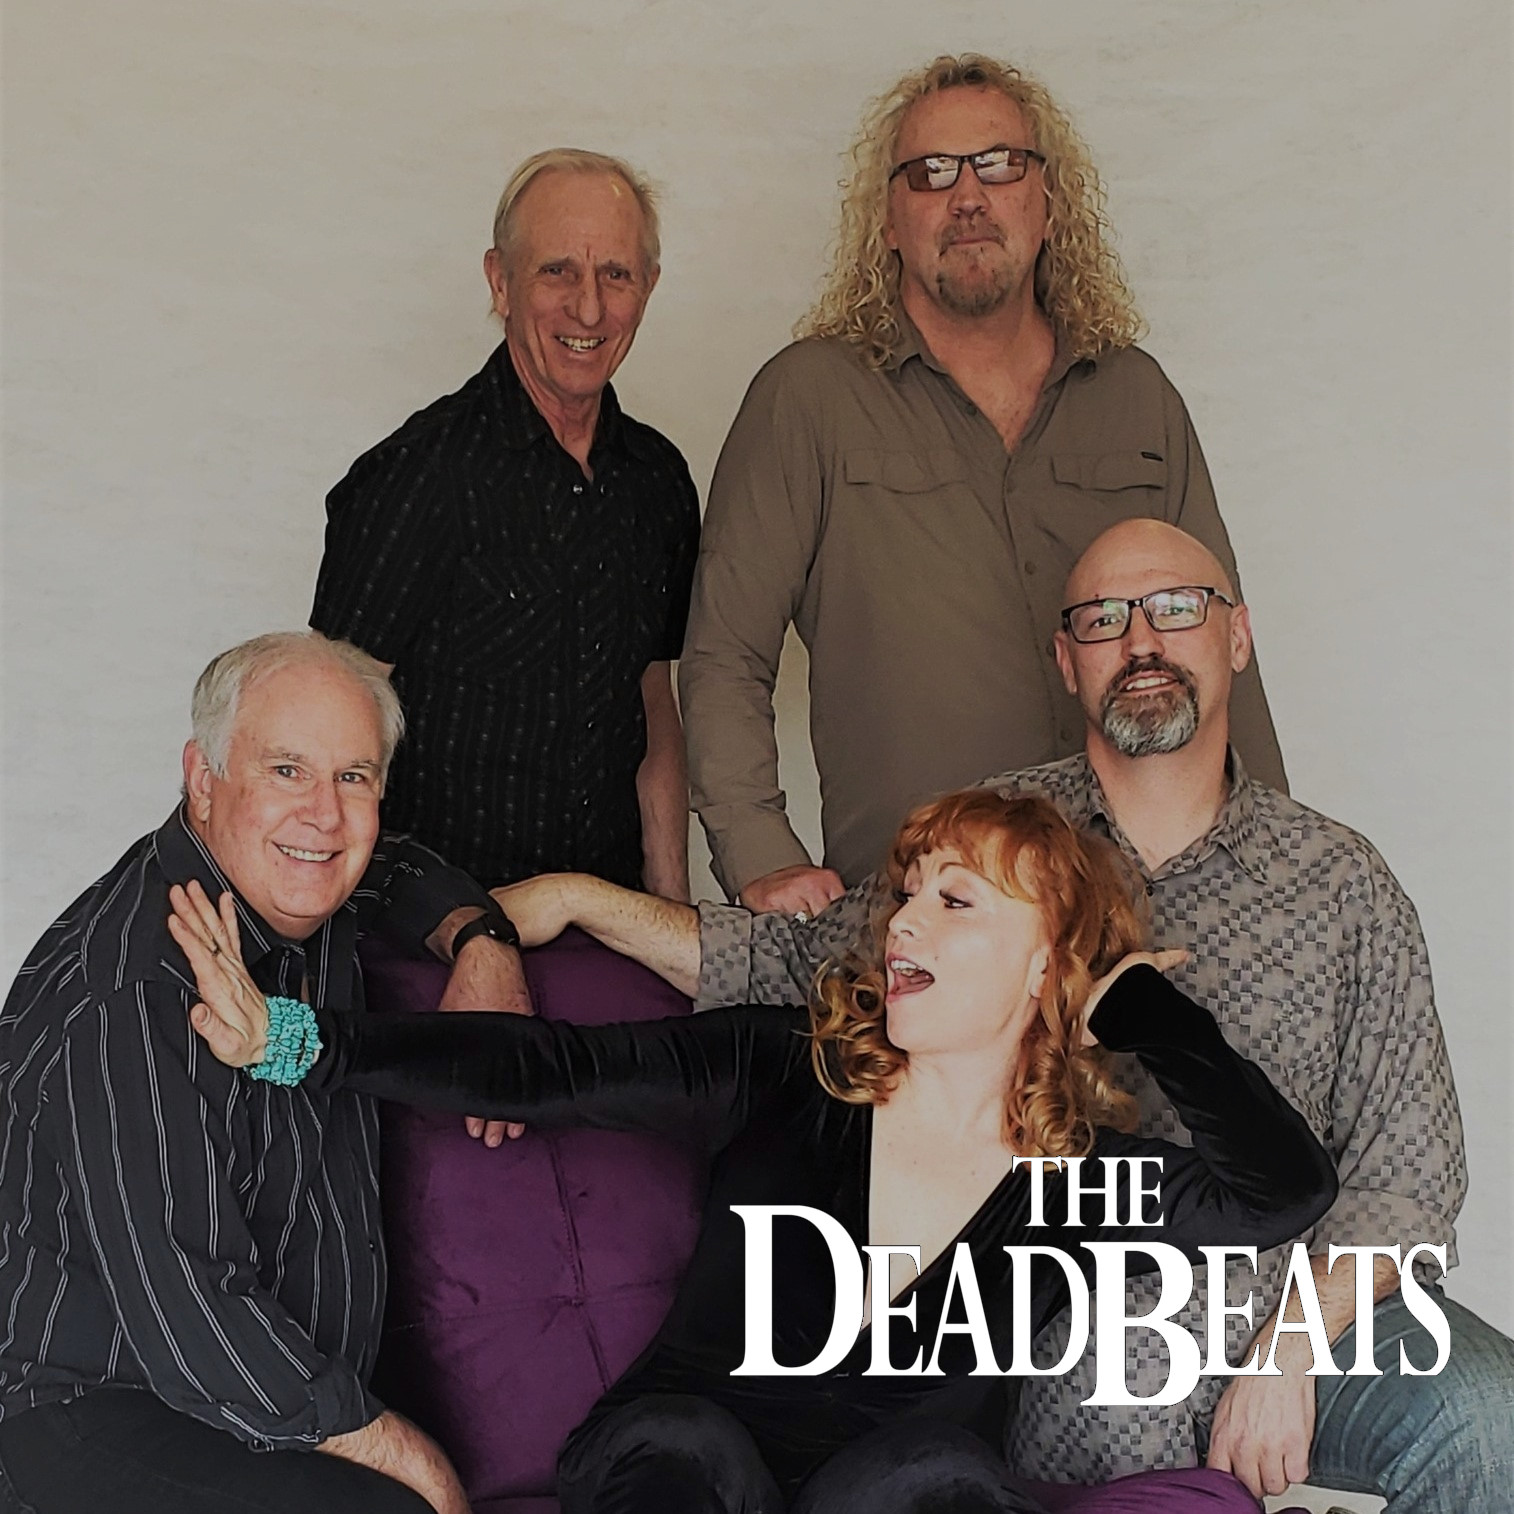 The Dead Beats